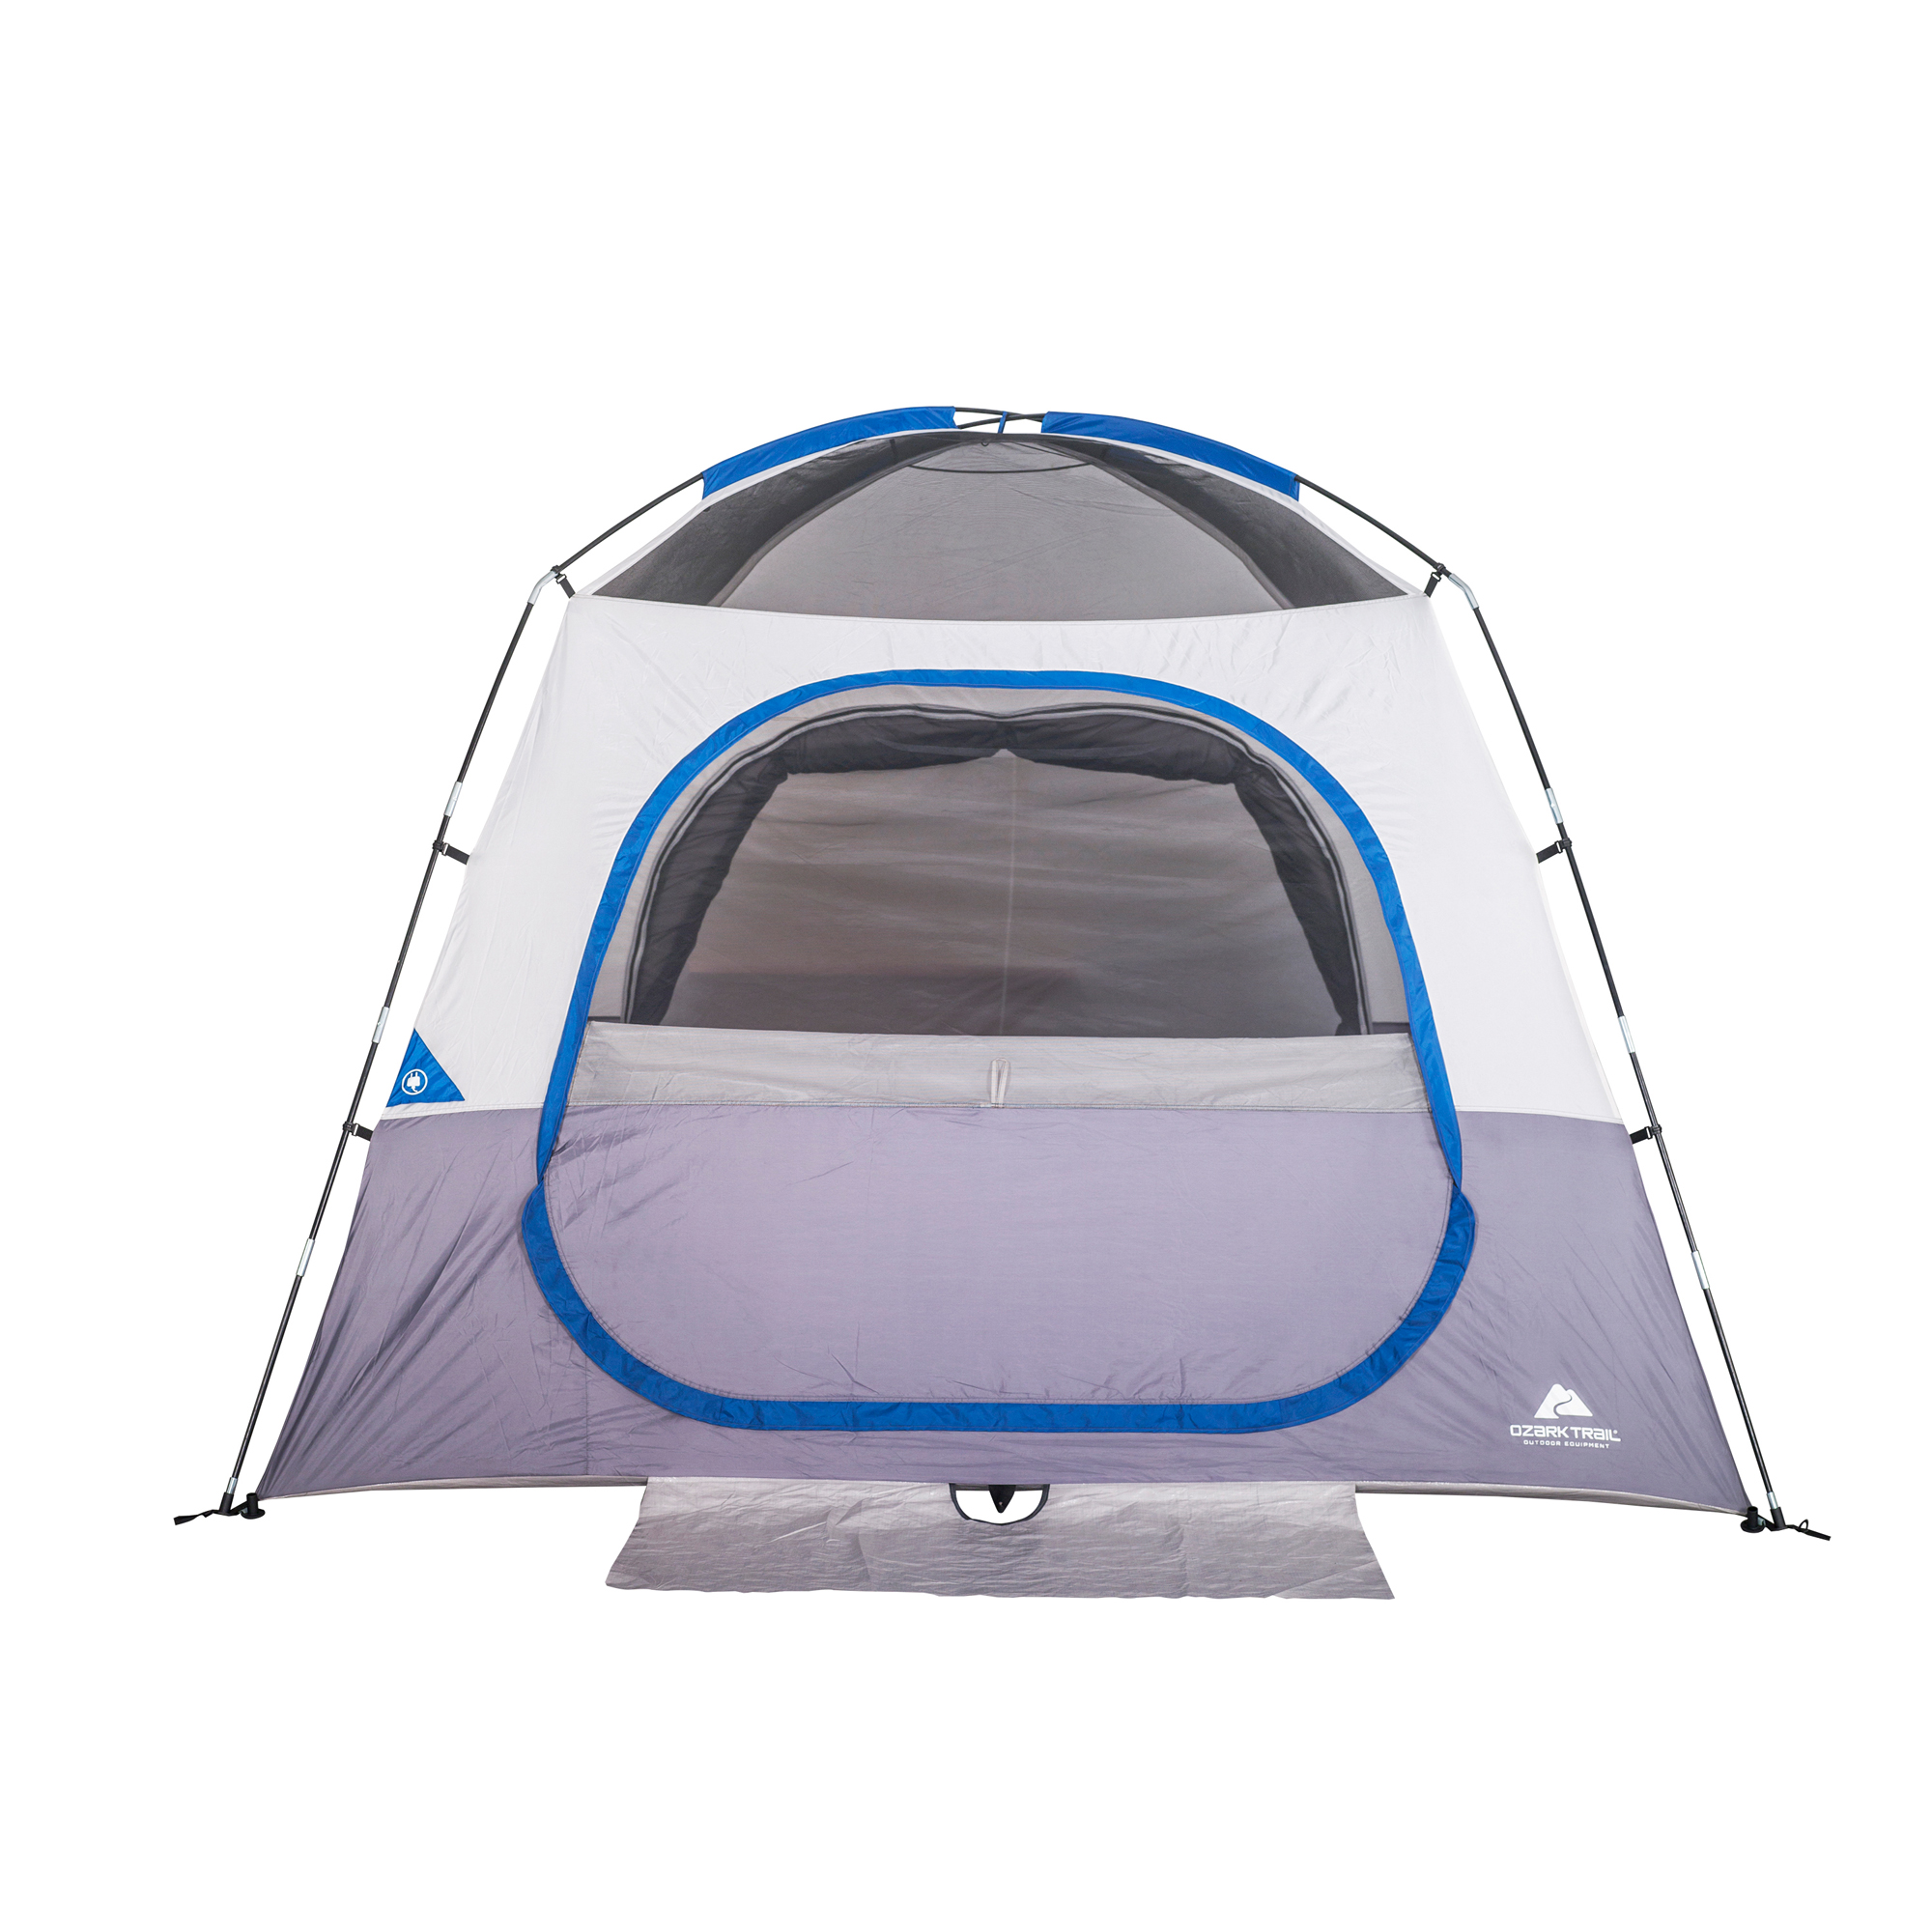 Ozark Trail 5-Person Dome Tent - image 5 of 10